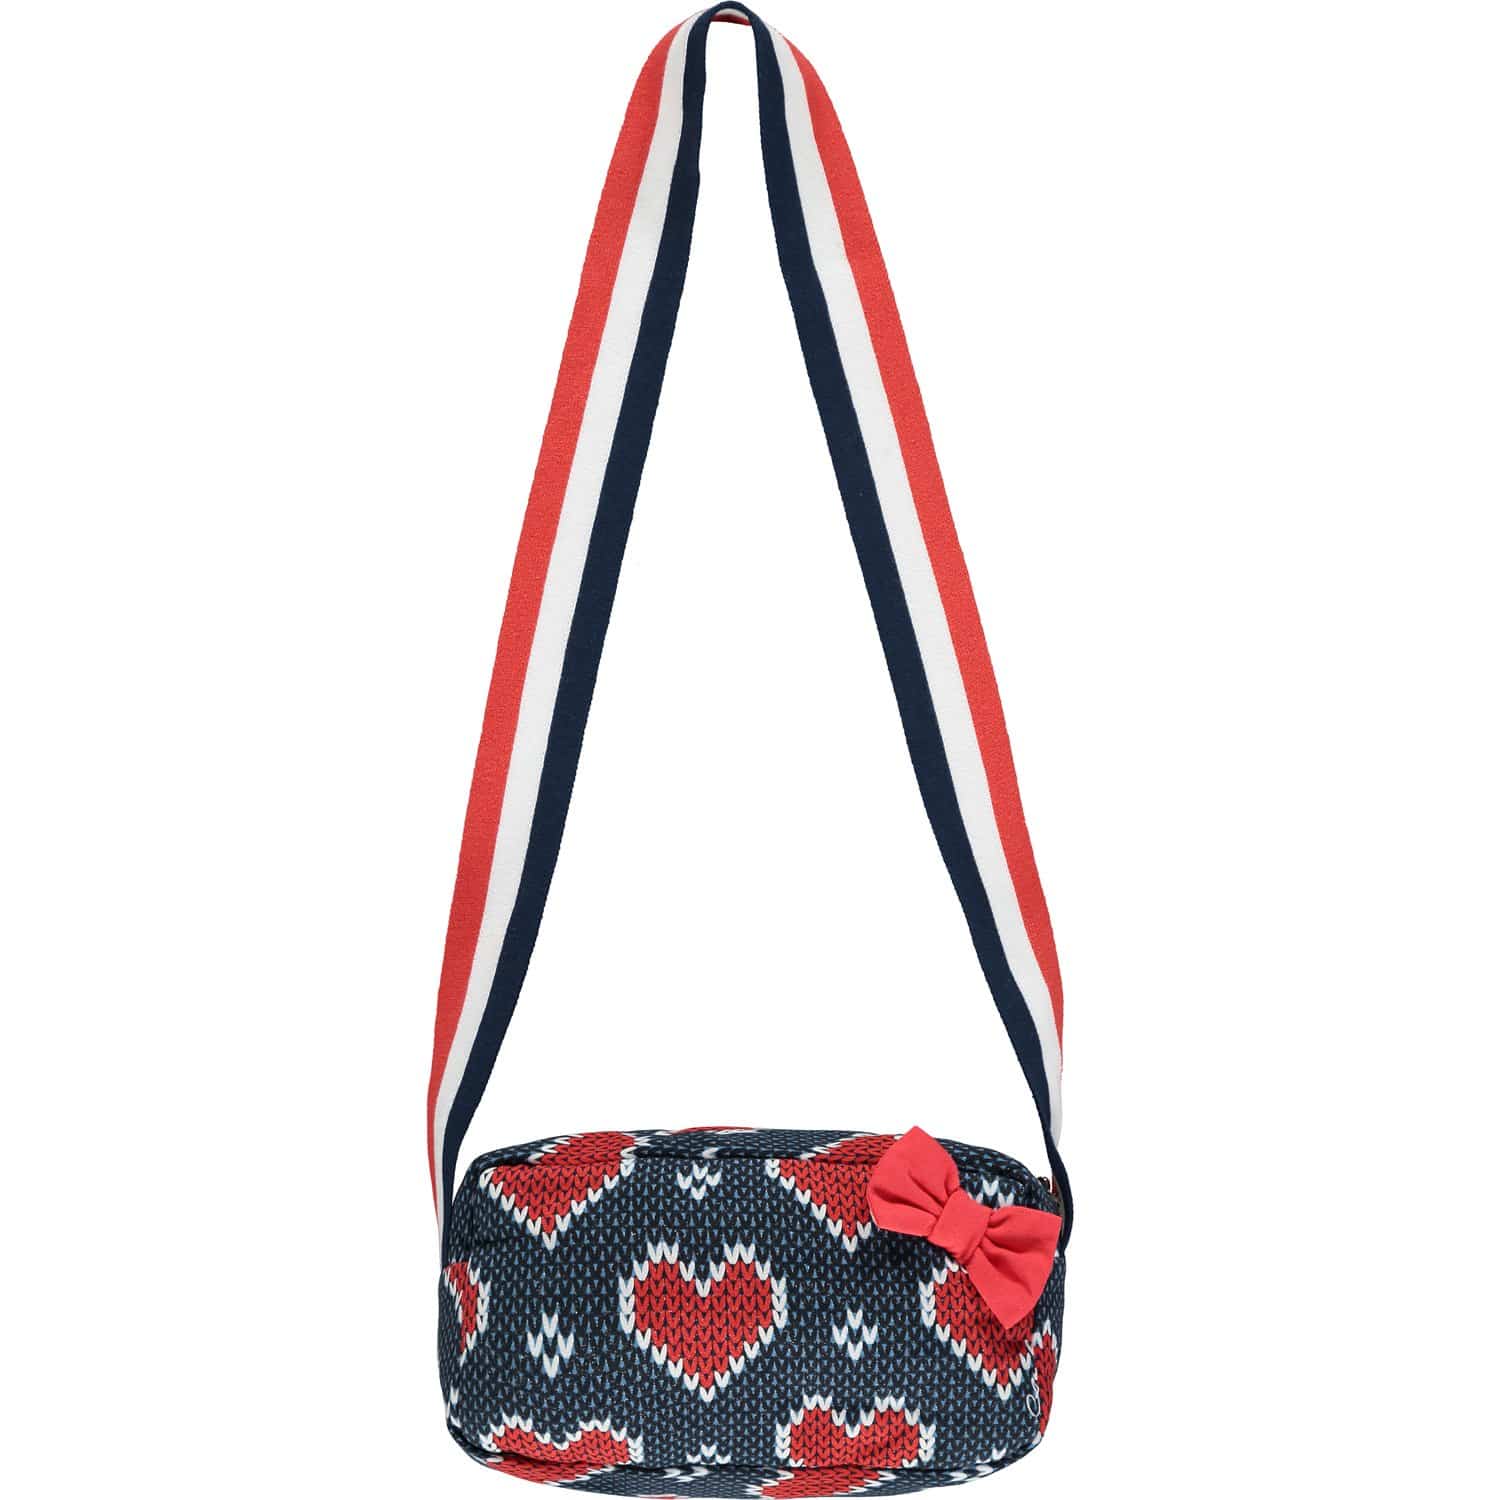 A DEE - Knitted Heart Bag - Navy